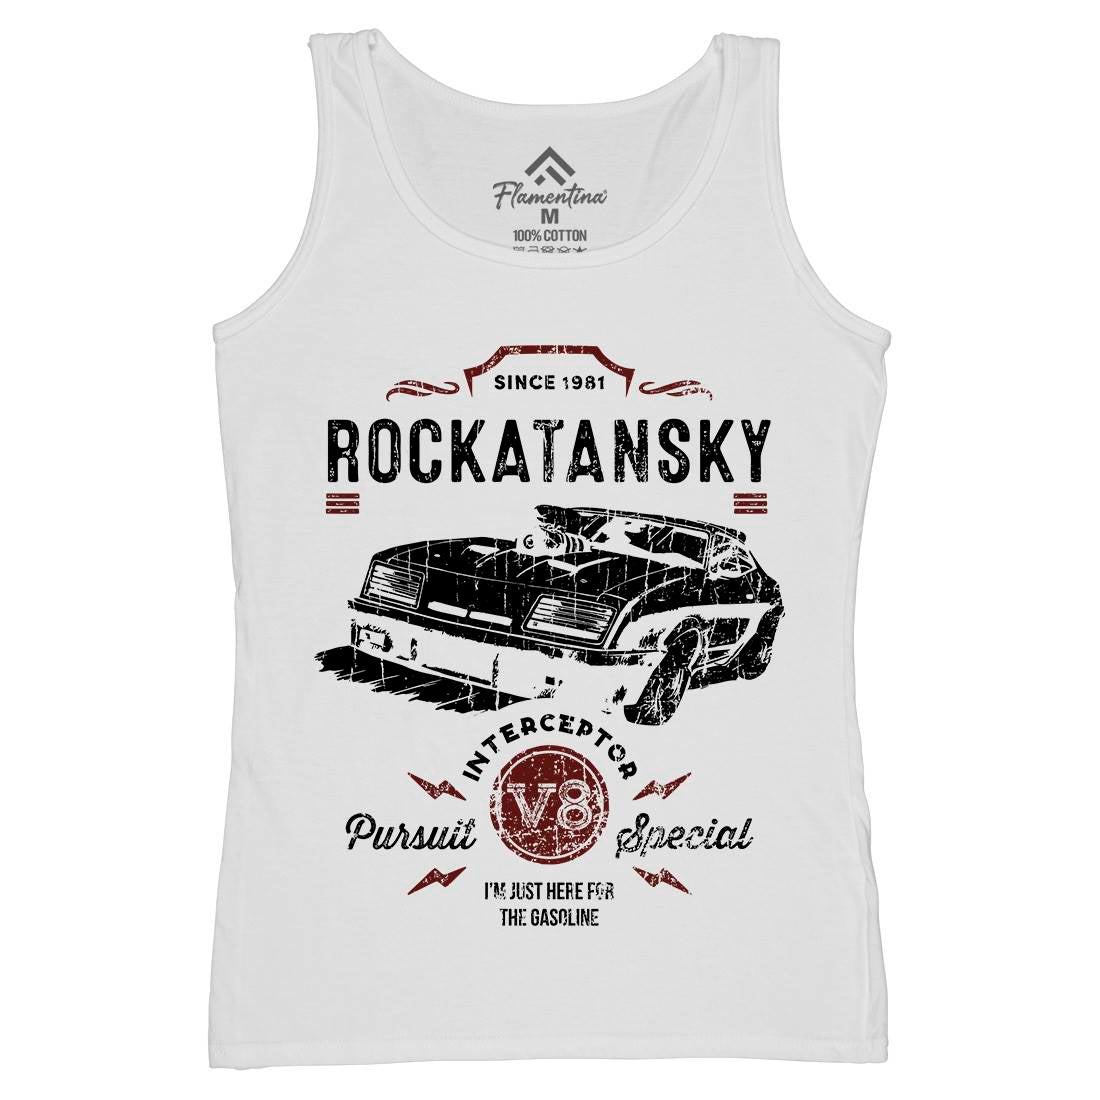 Rockatansky Womens Organic Tank Top Vest Cars D221